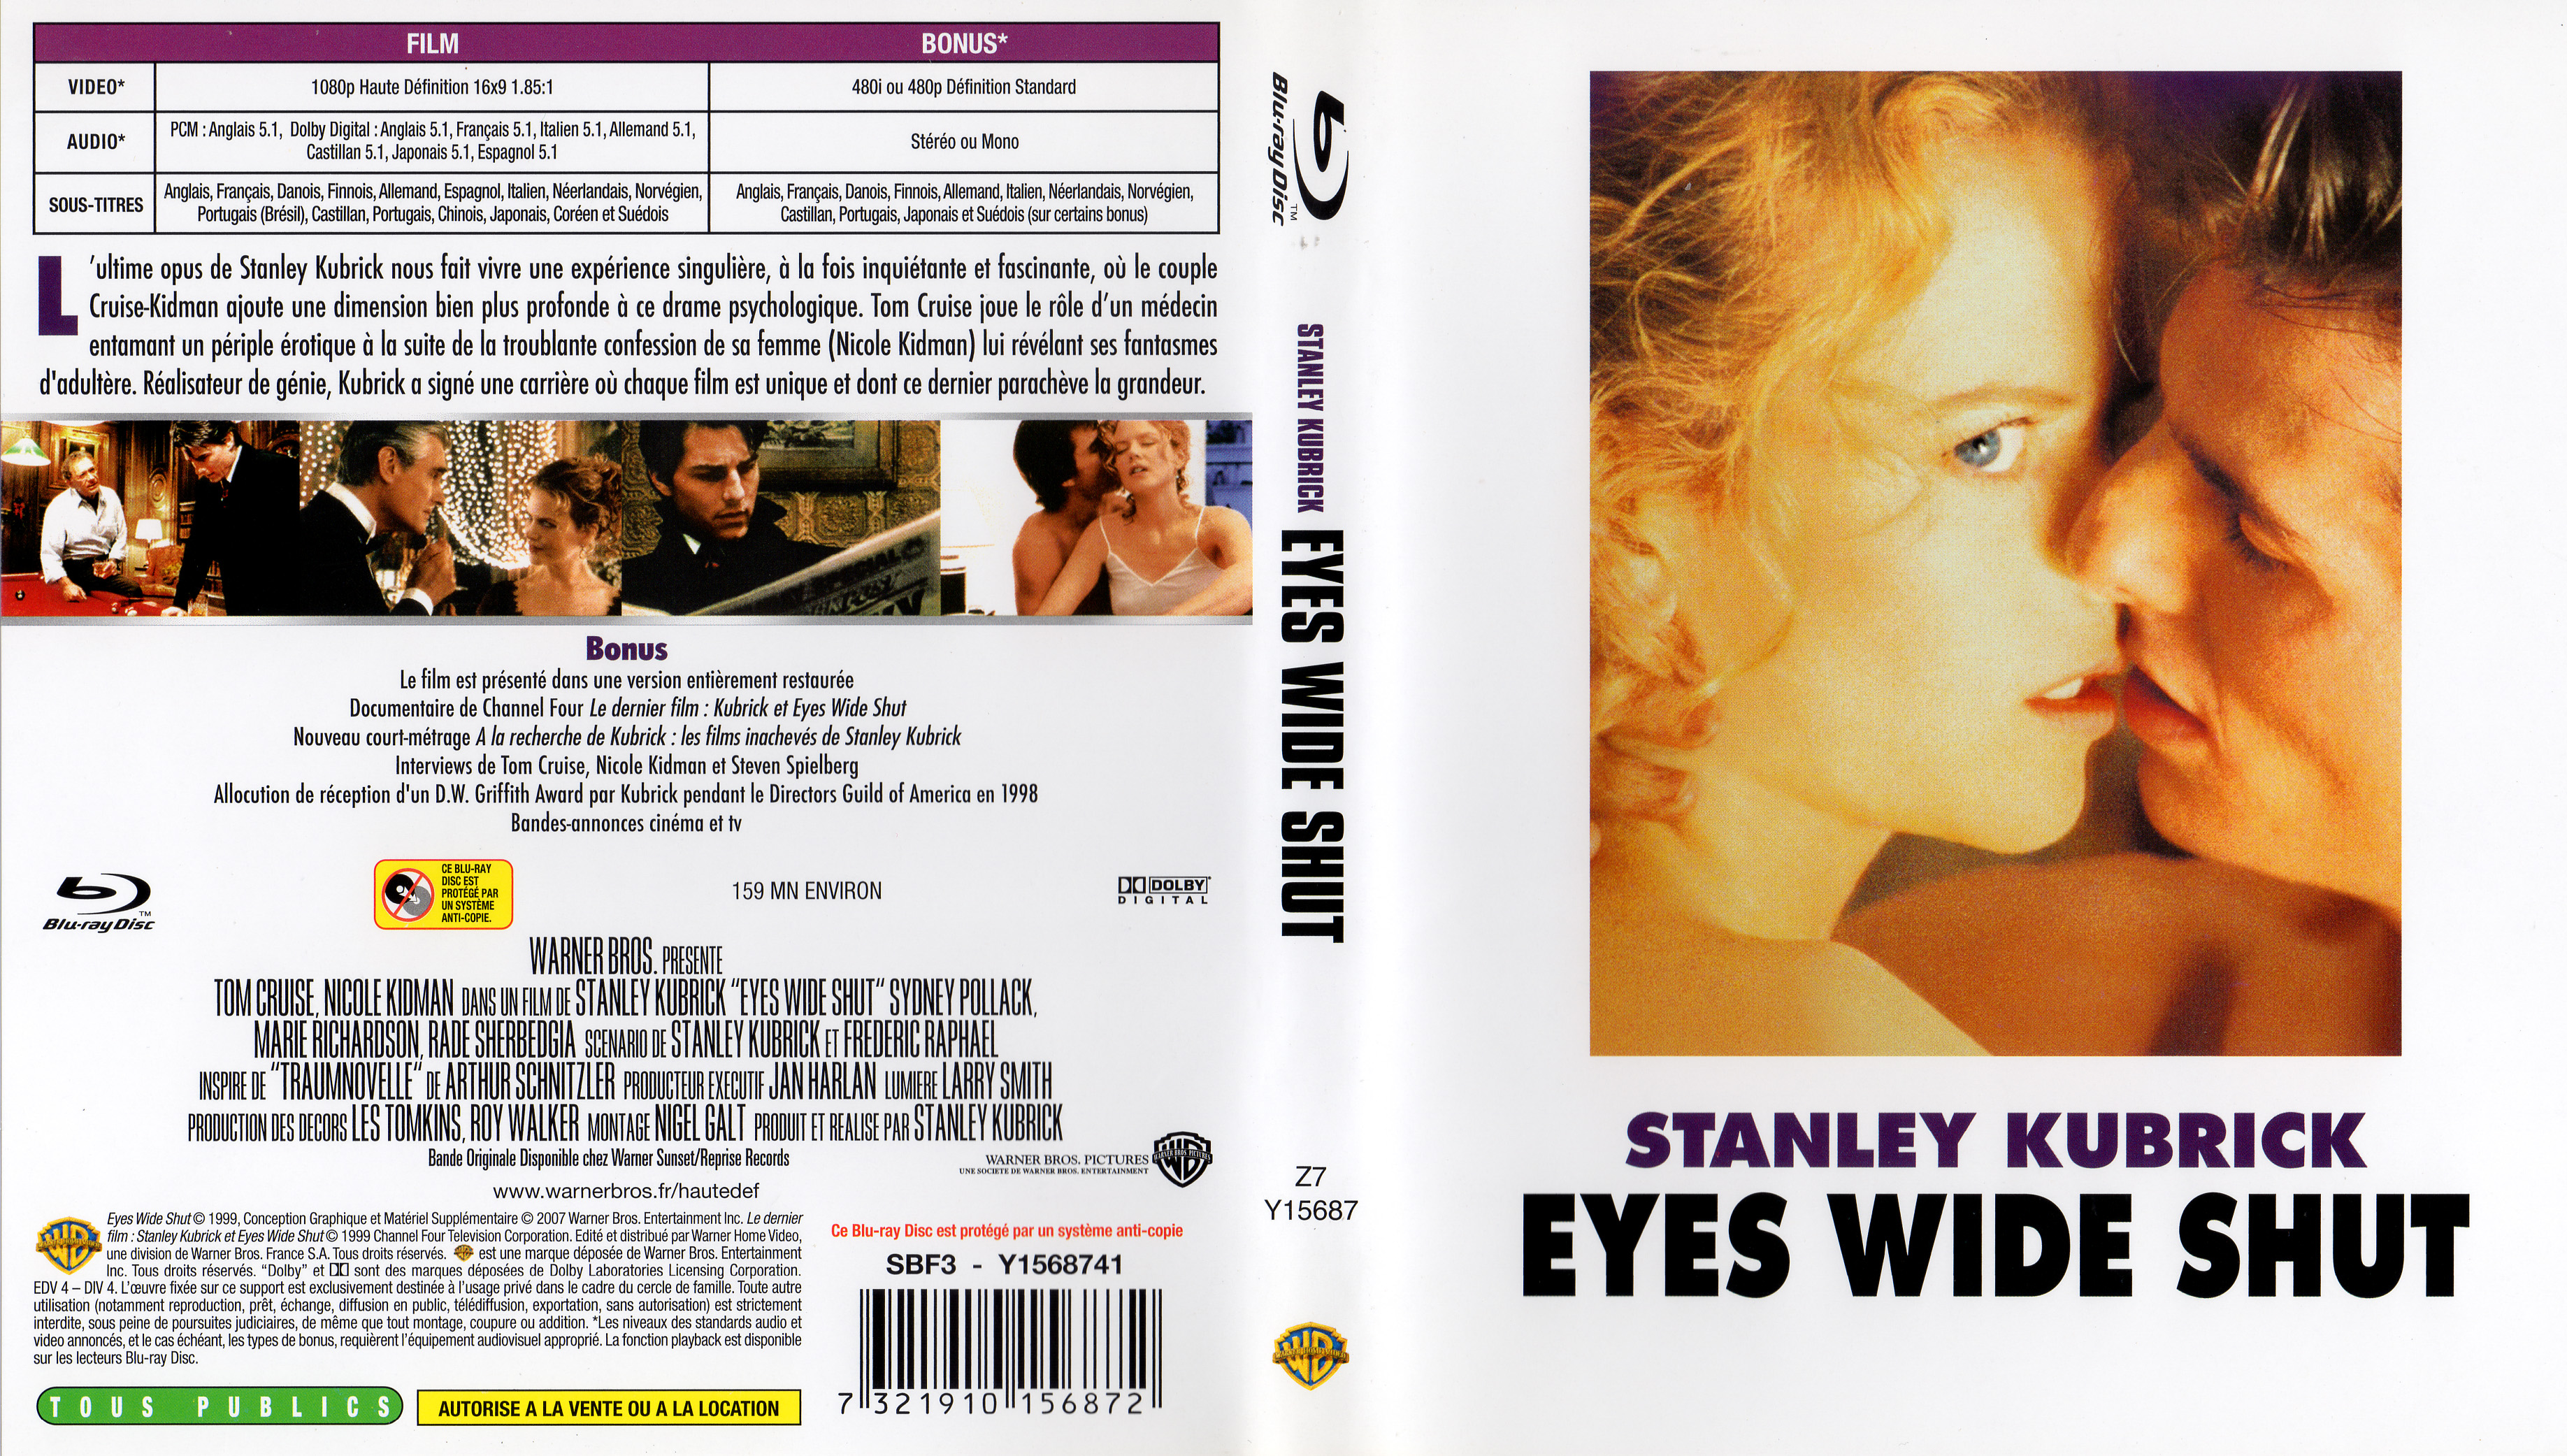 Jaquette DVD Eyes wide shut (BLU-RAY)